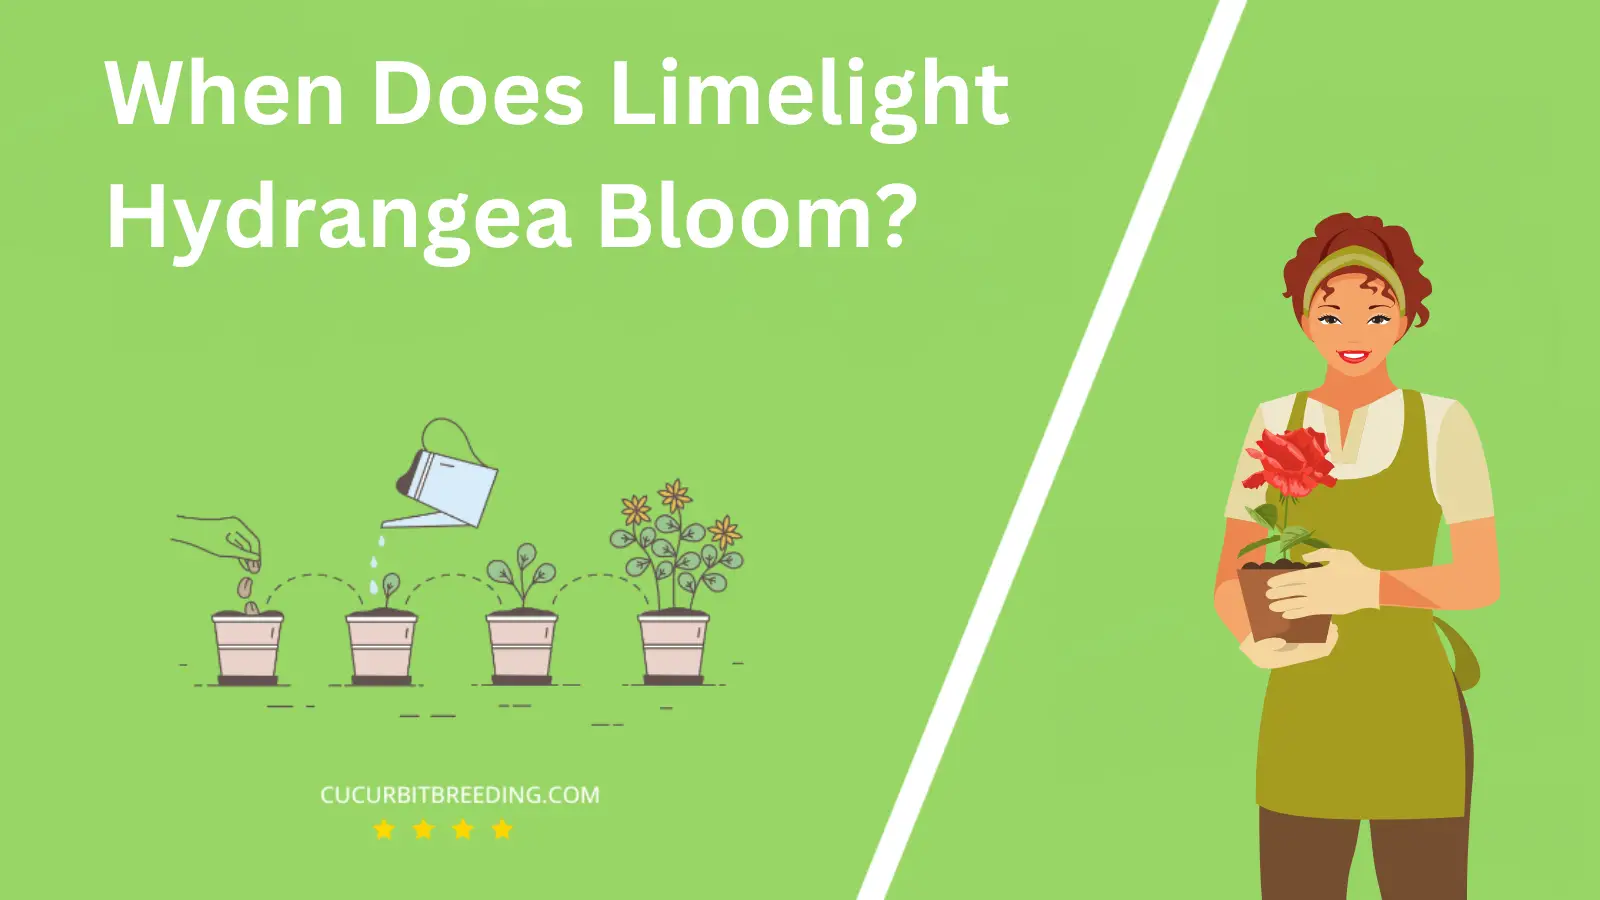 When Does Limelight Hydrangea Bloom?